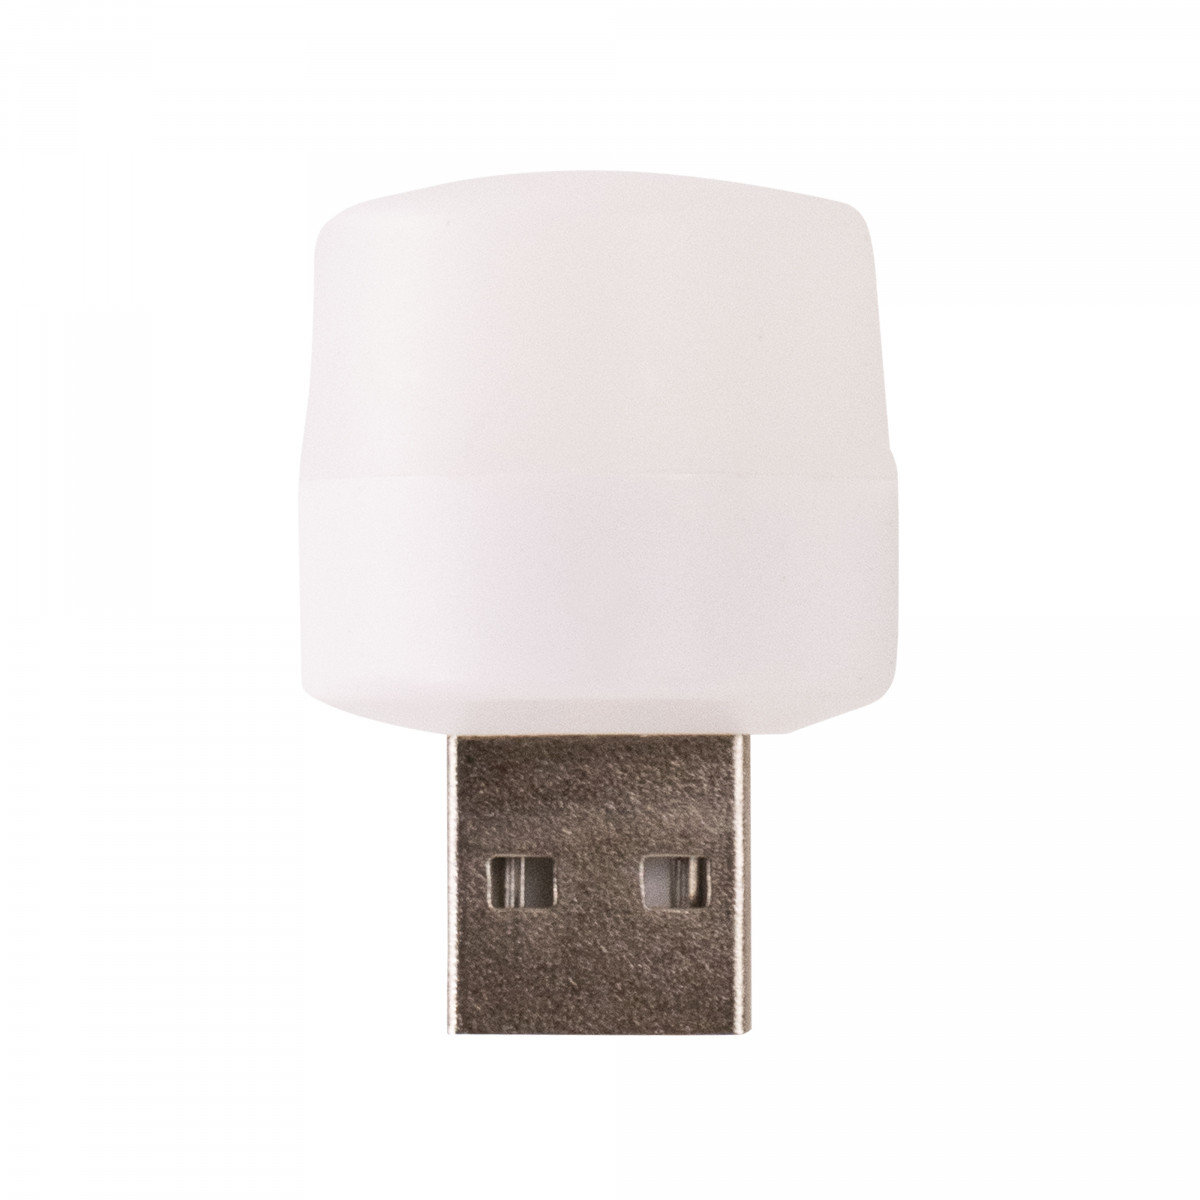 USB small lamp